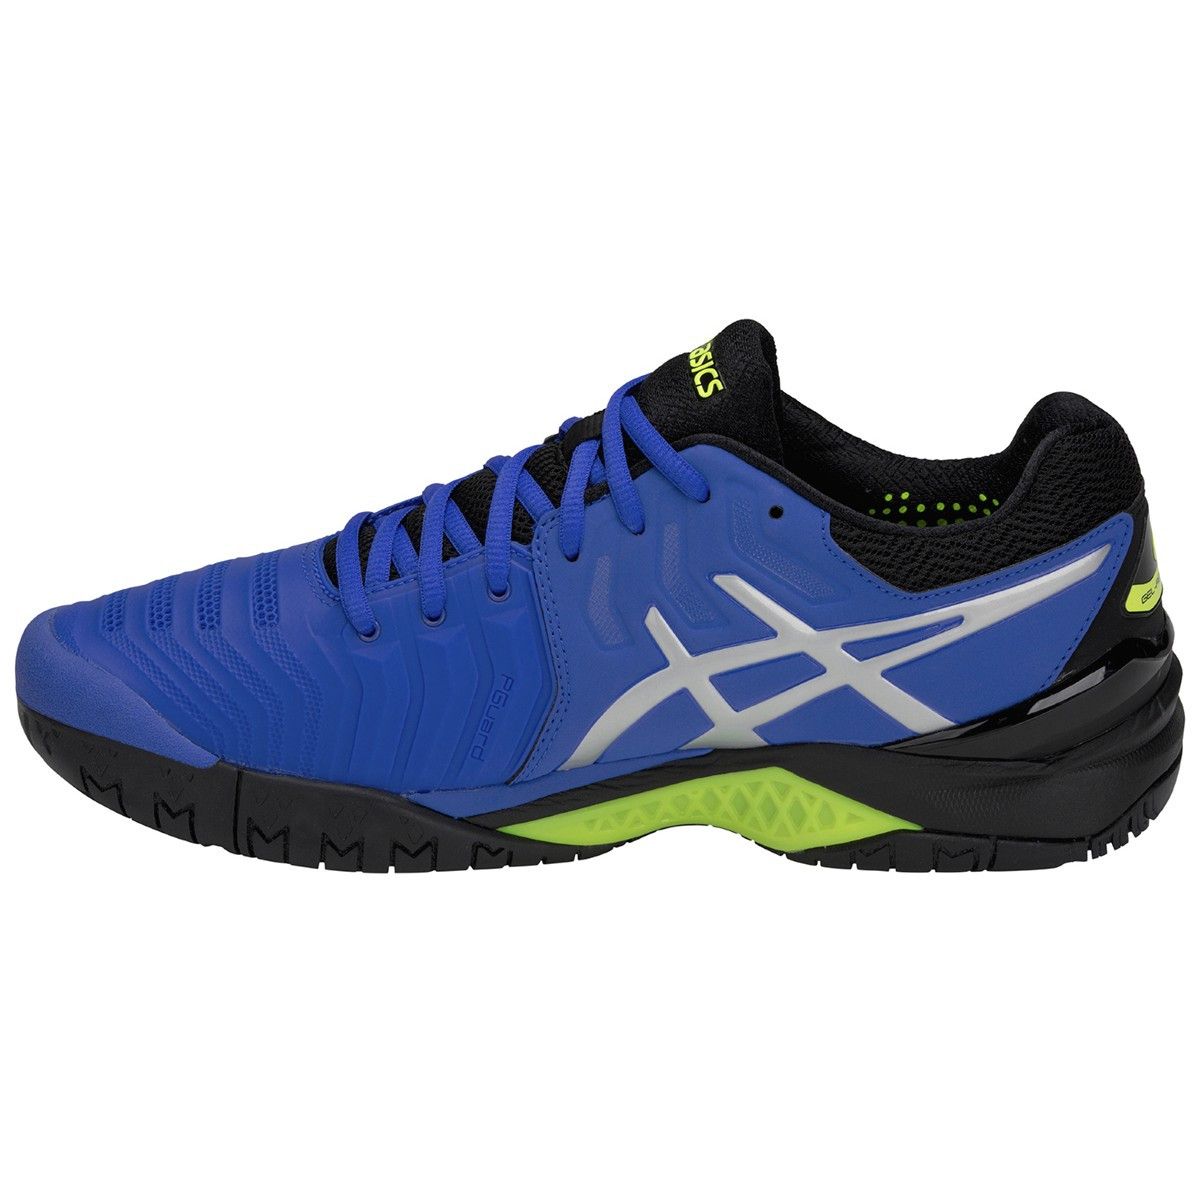 Asics Gel Resolution 7 Men's Tennis Shoes E701Y-407